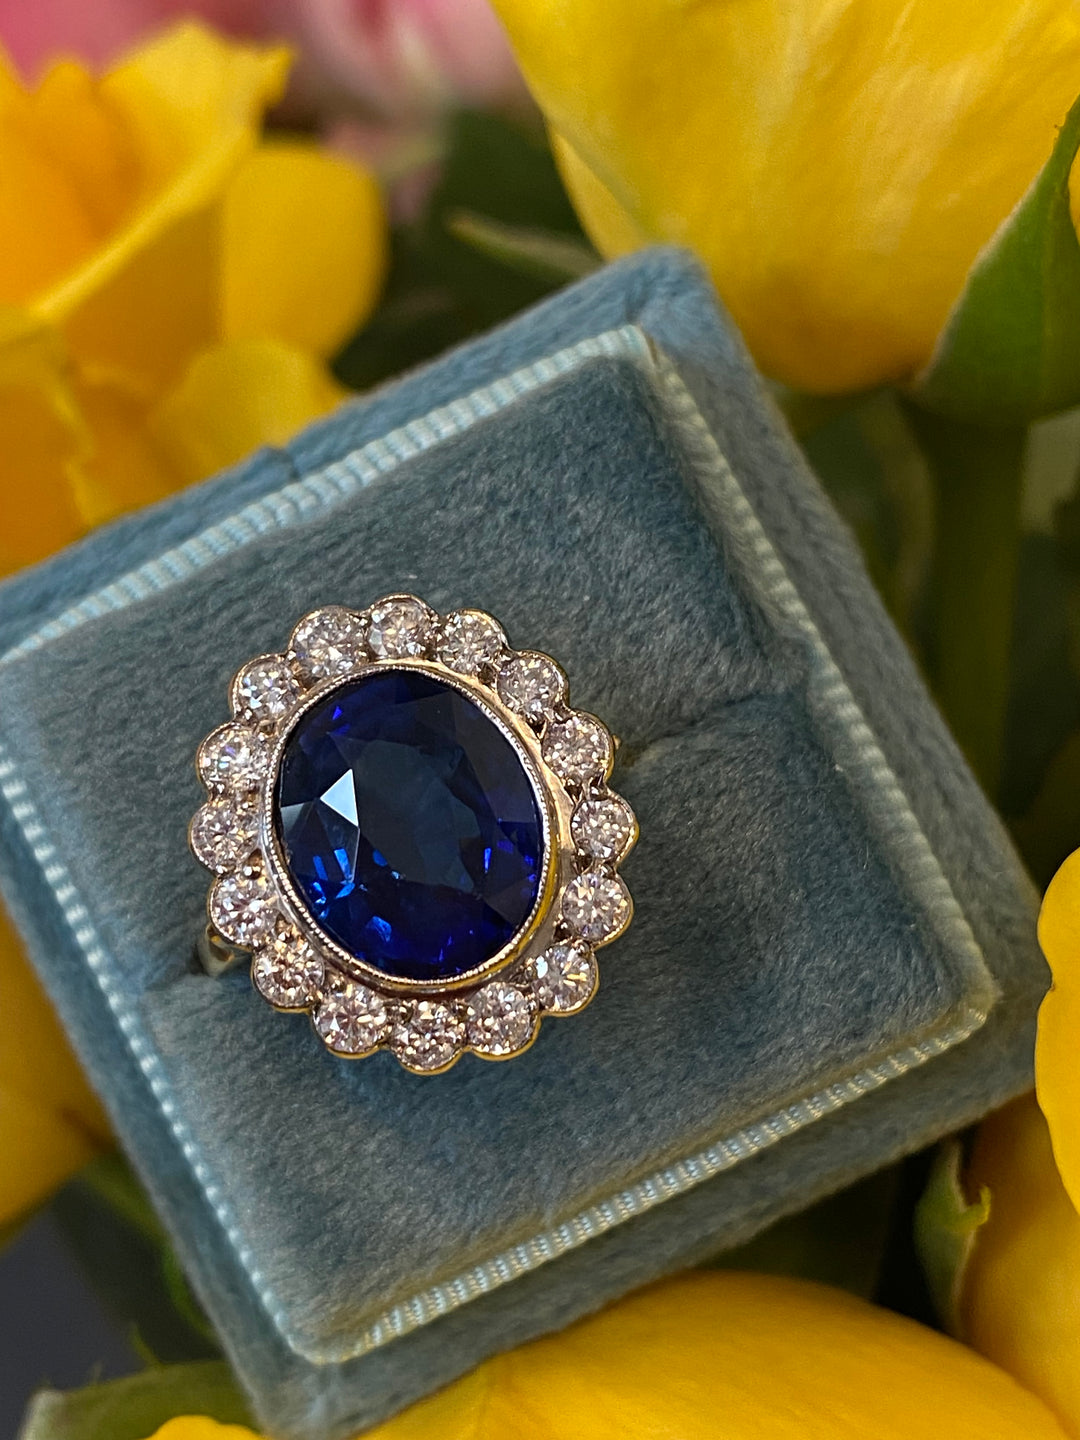 5.35 Carat Blue Ceylon Sapphire and Diamond Halo Ring in 18ct Gold